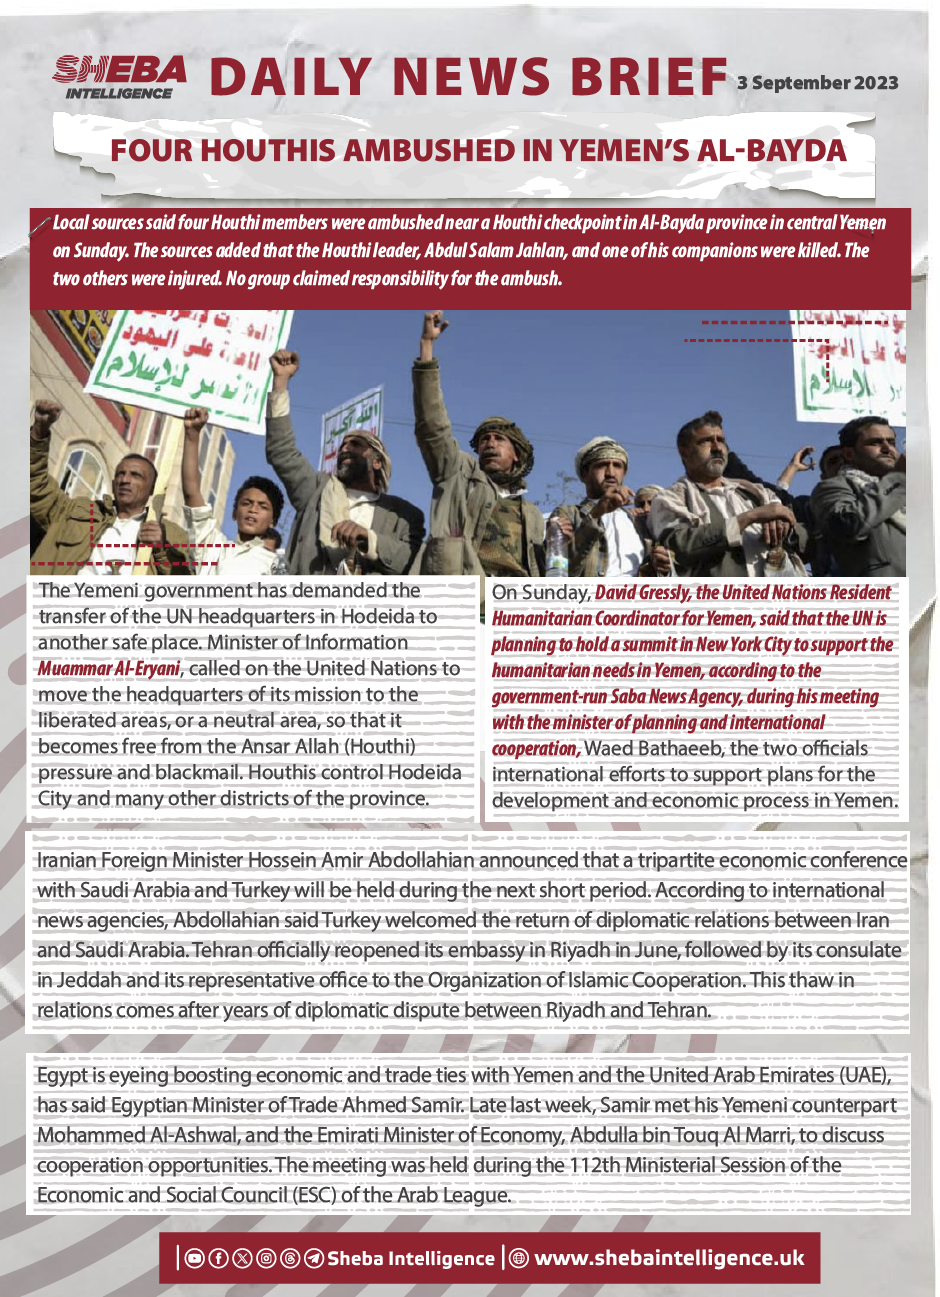 Four Houthis Ambushed in Yemen’s Al-Bayda